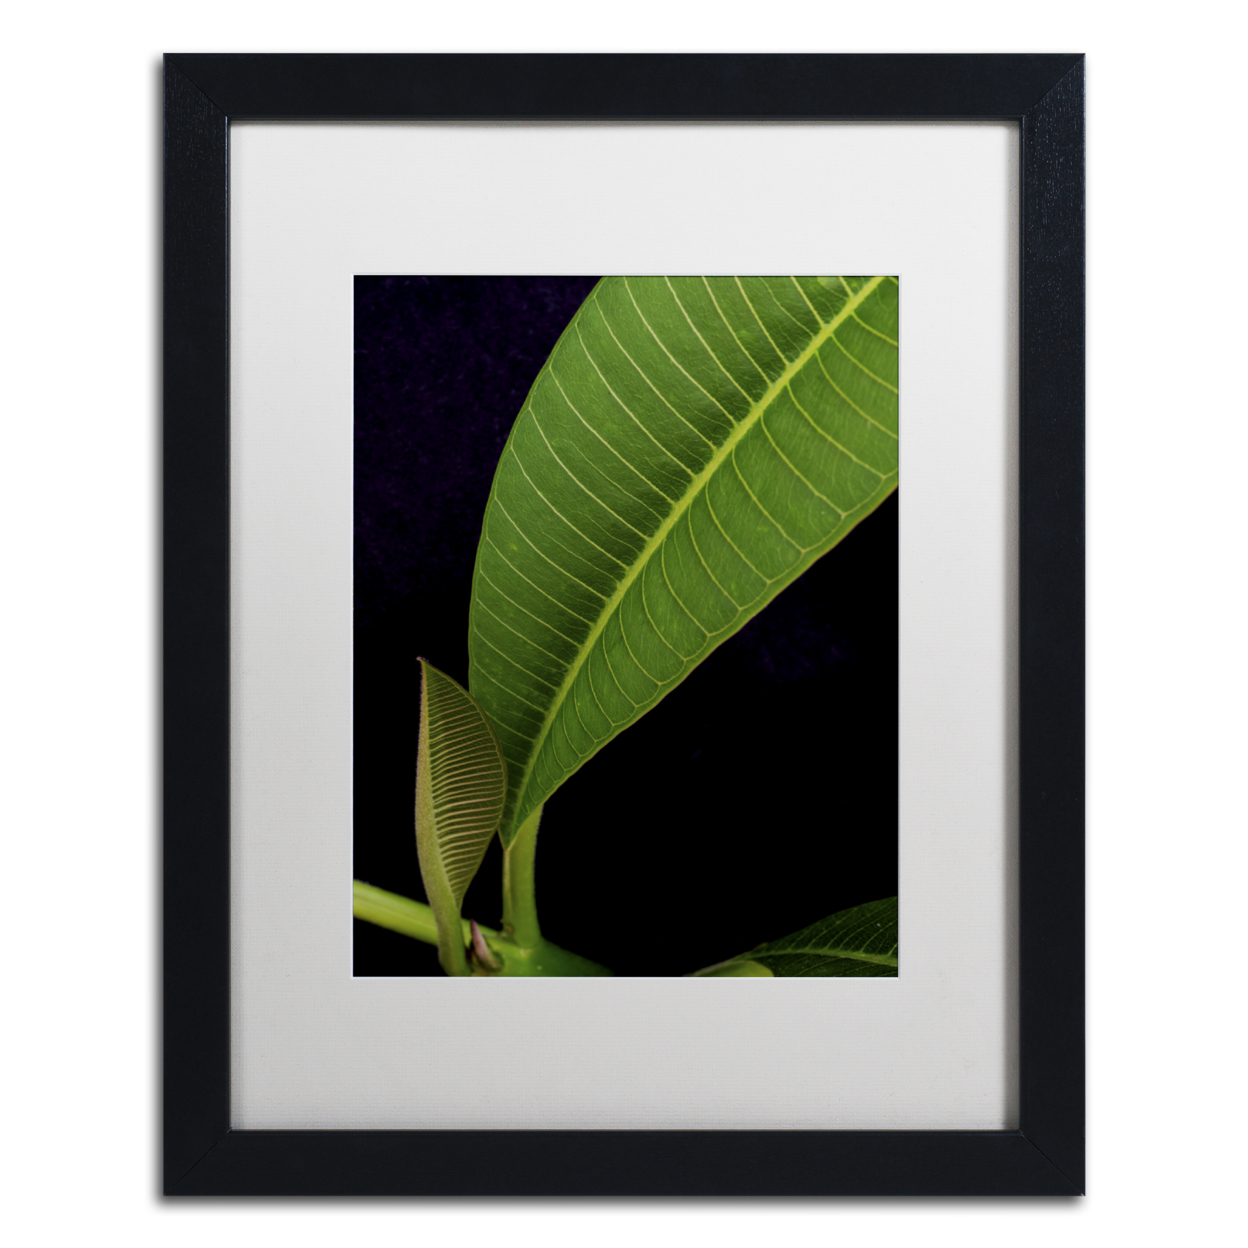 Kurt Shaffer 'Plumeria Leaf Abstract' Black Wooden Framed Art 18 X 22 Inches